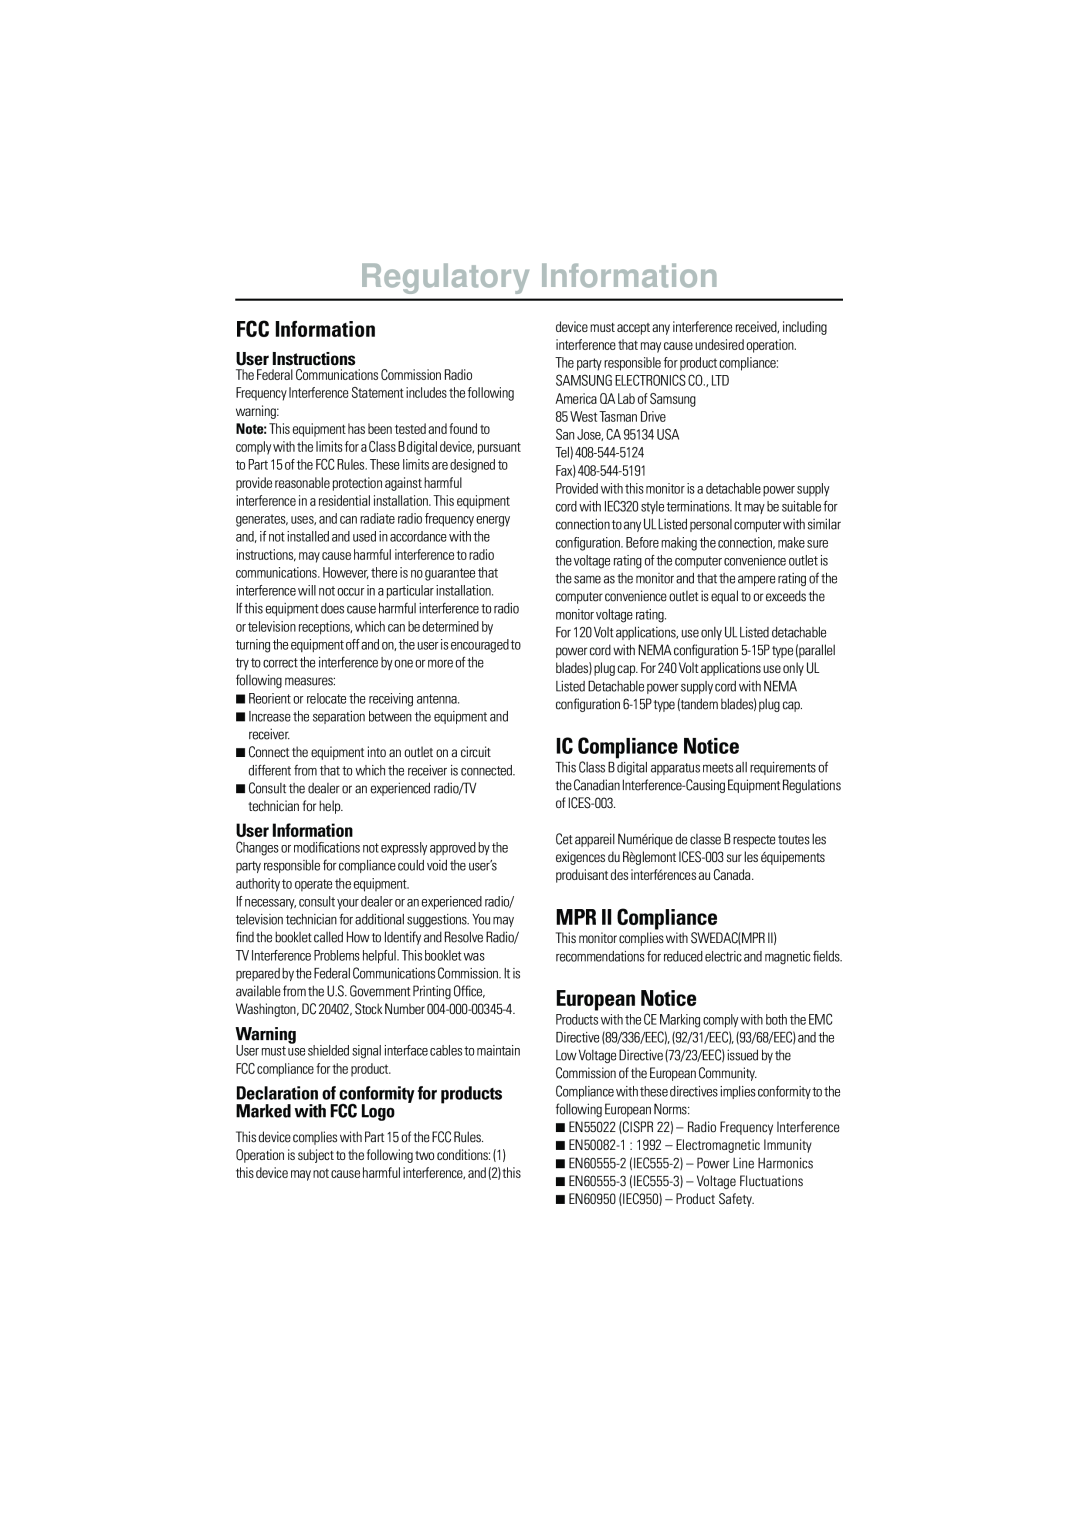 Samsung 150MP manual Regulatory Information, FCC Information, IC Compliance Notice, MPR II Compliance, European Notice 